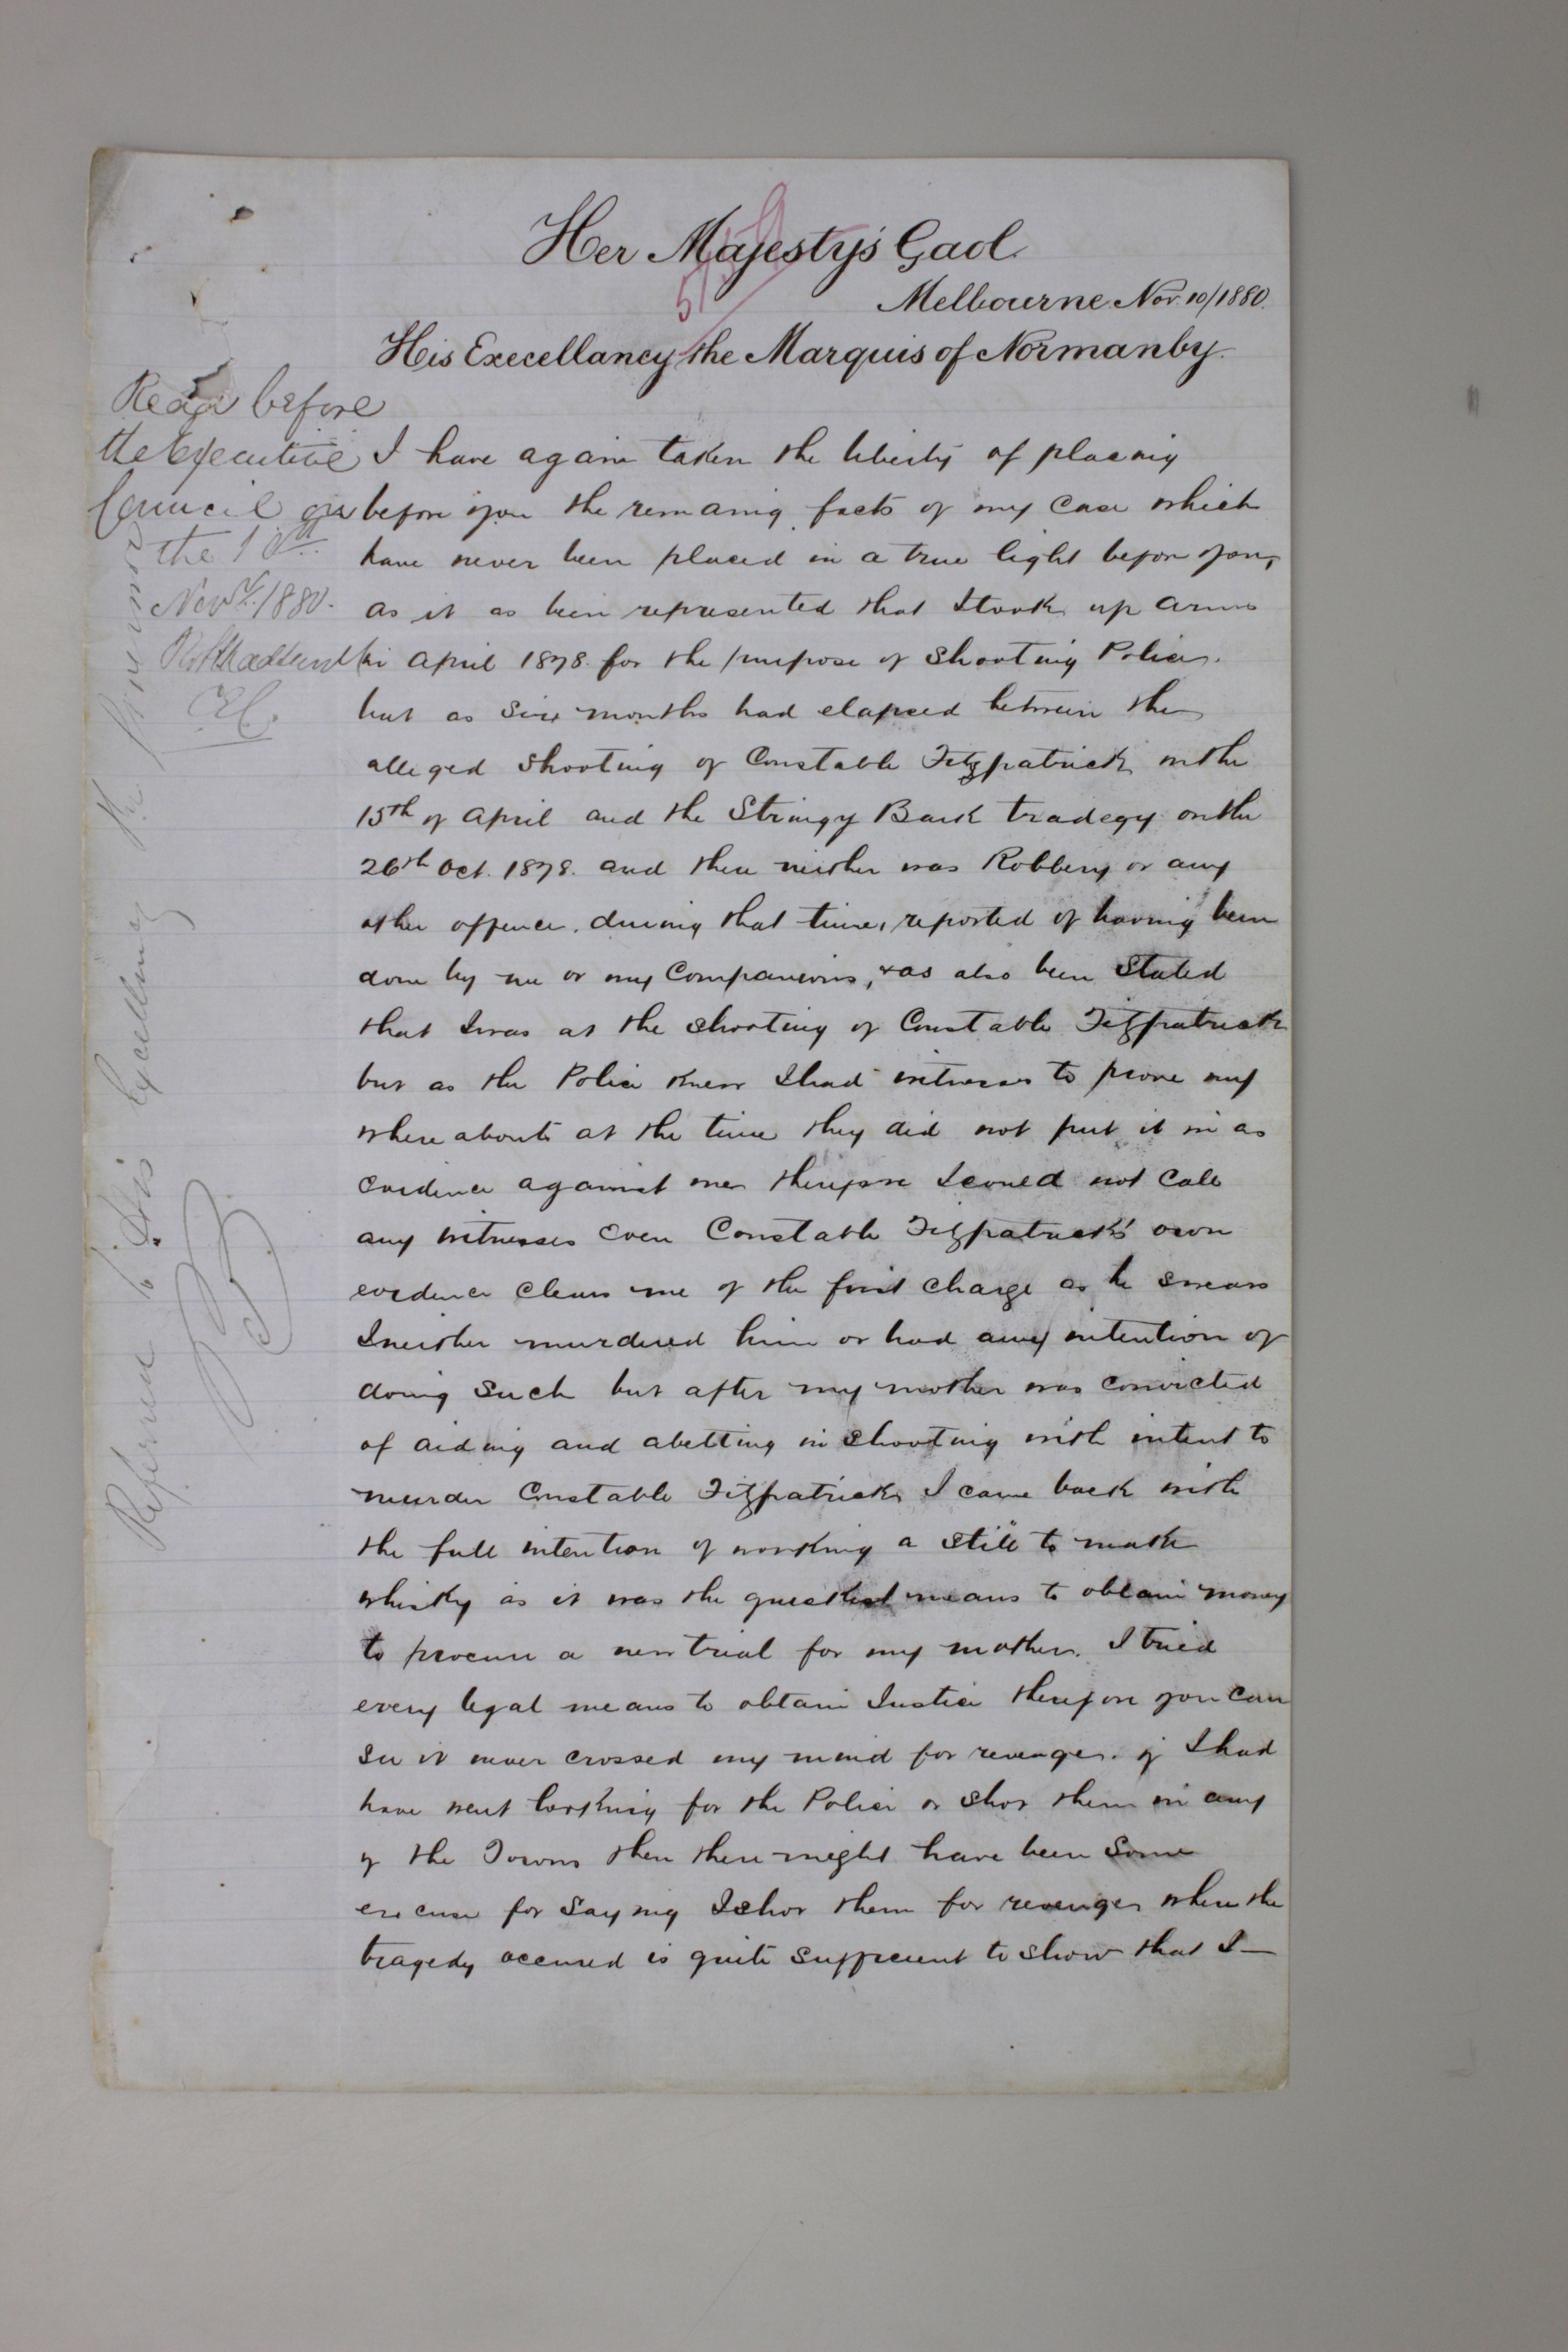 A photo of a hnadwritten letter